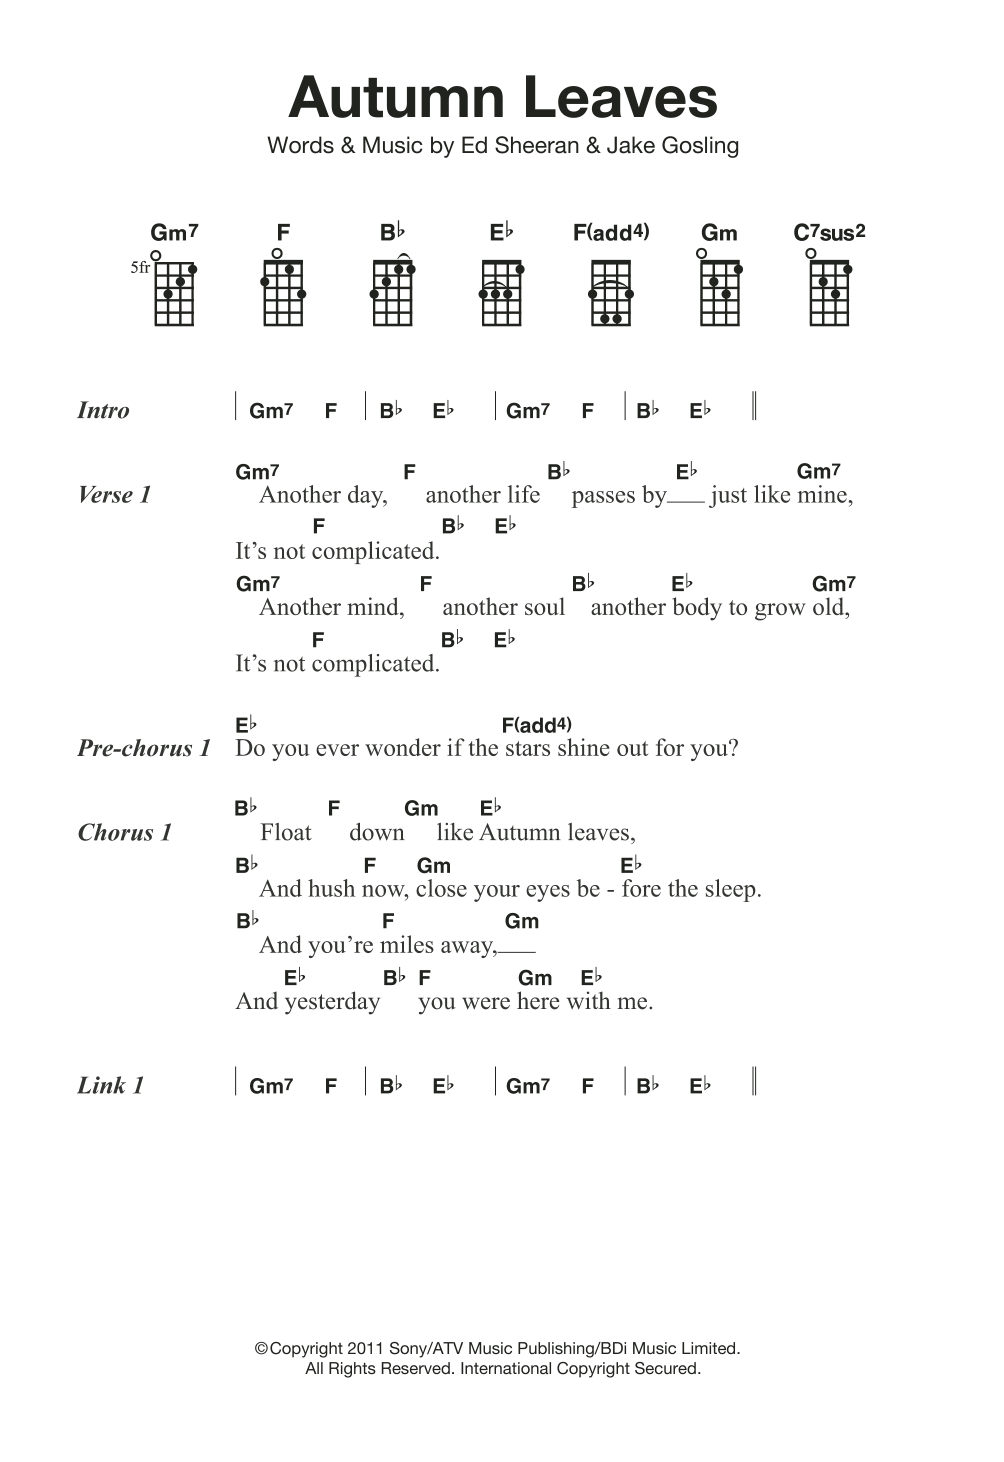 Ed Sheeran Autumn Leaves sheet music notes and chords arranged for Guitar Chords/Lyrics